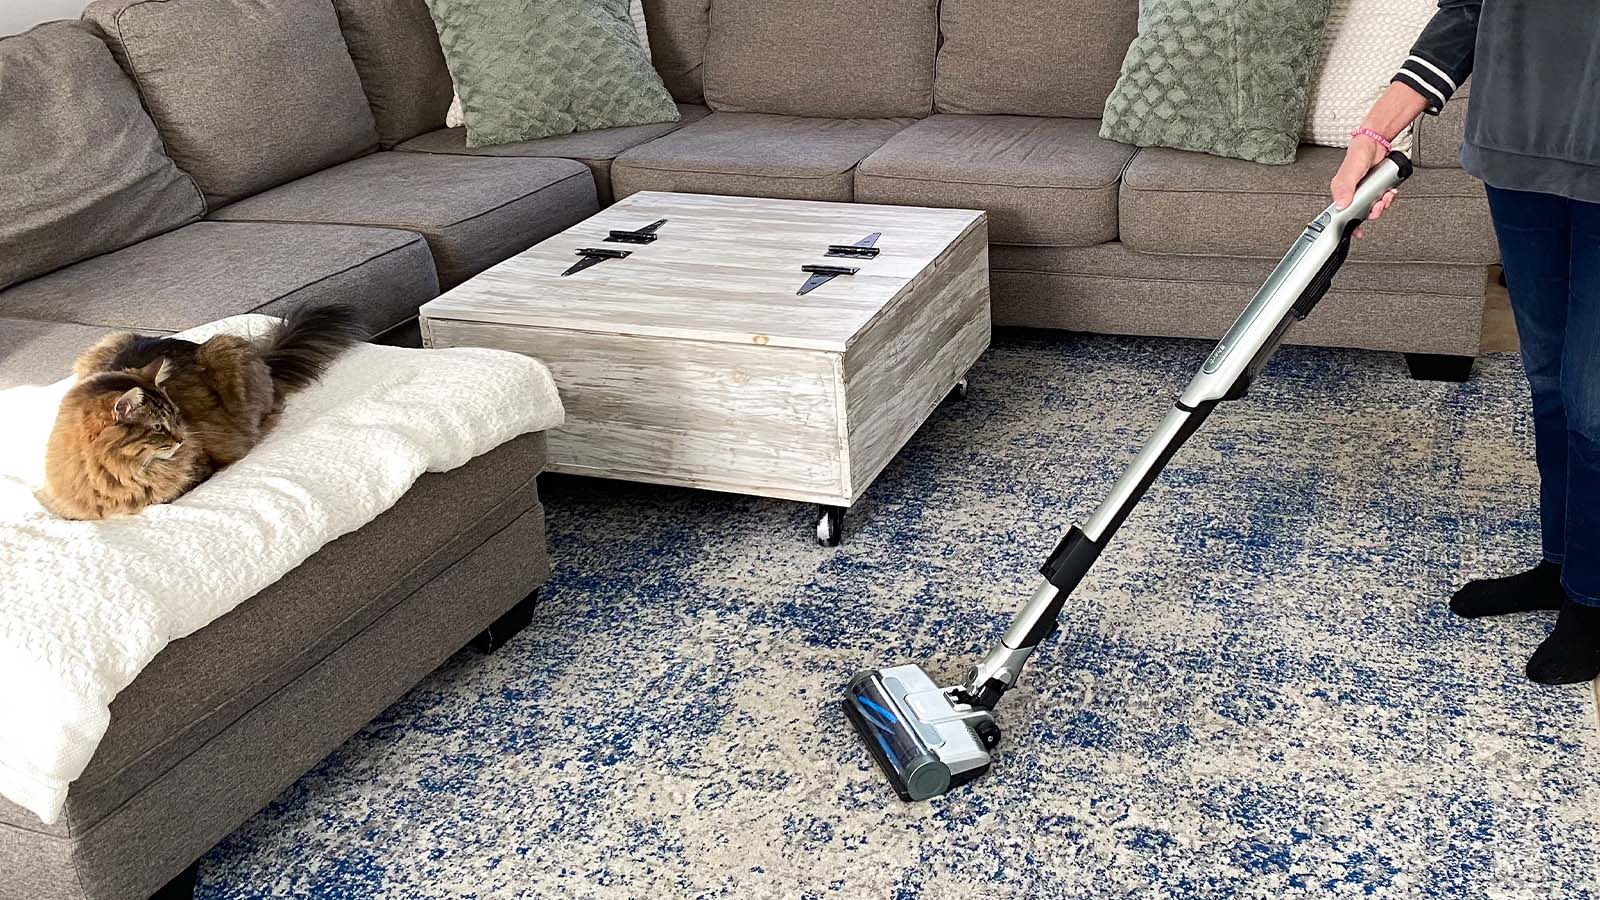 Best Cordless Stick Vacuum In 2022, Best Cordless Stick Vacuum For Hardwood Floors And Pet Hair